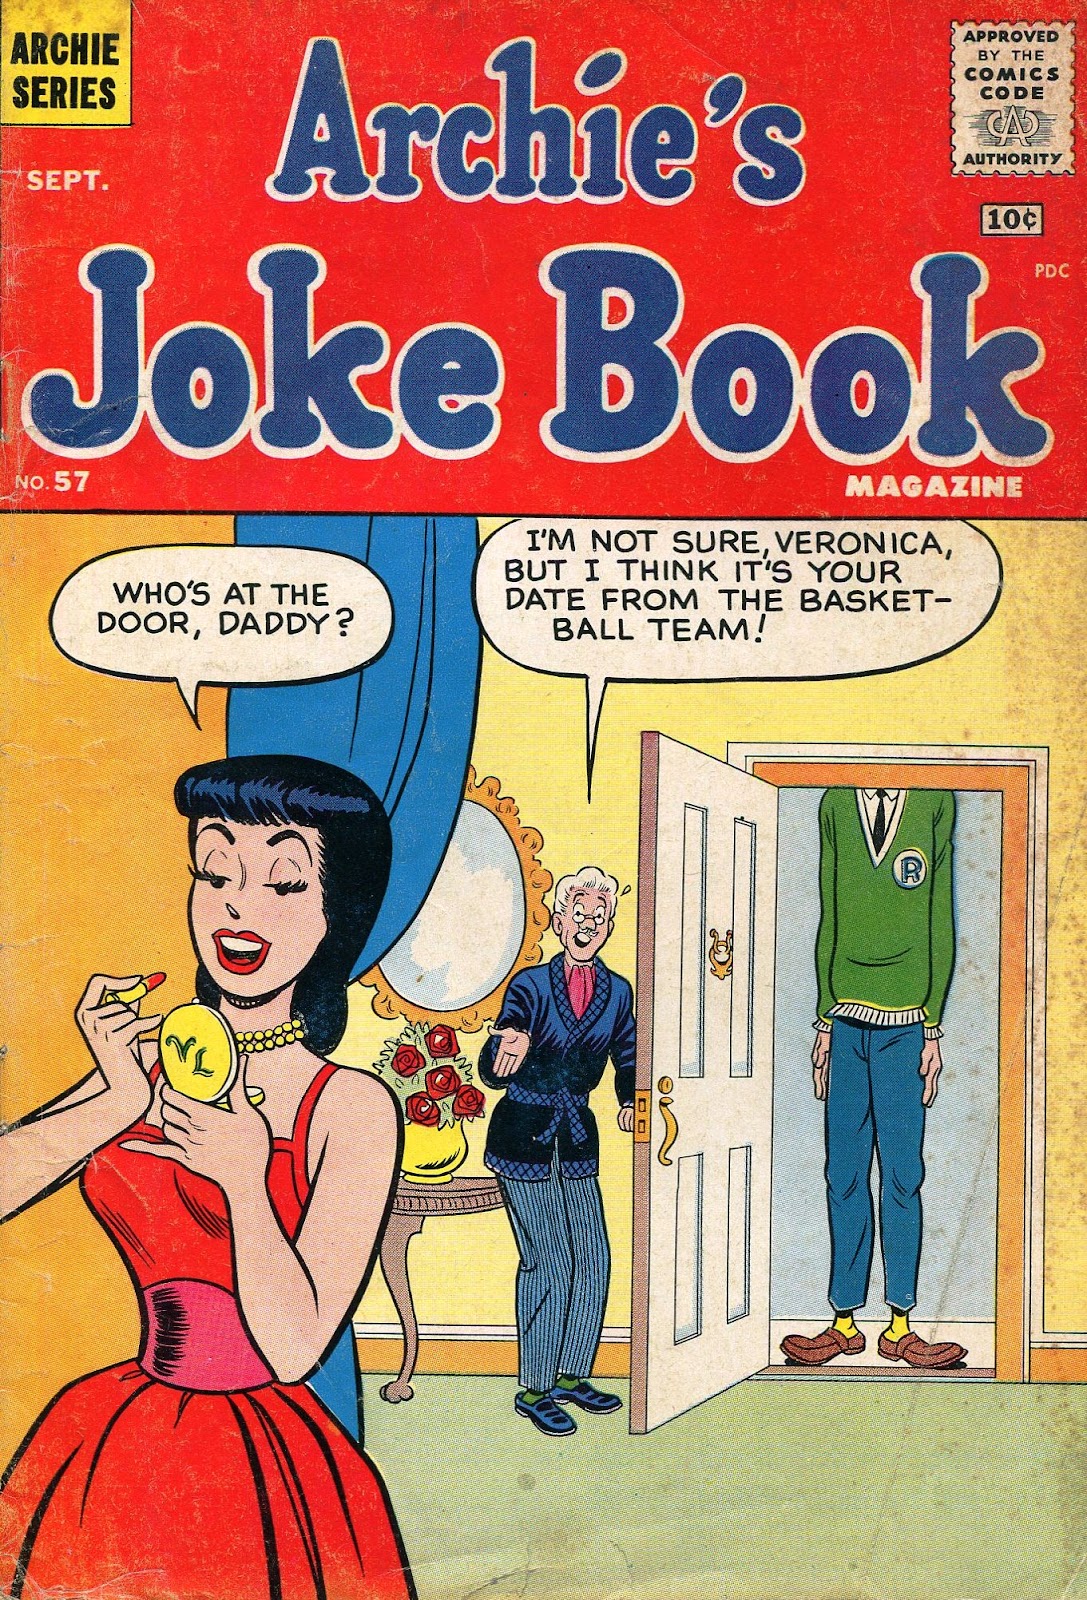 Archie's Joke Book Magazine issue 57 - Page 1